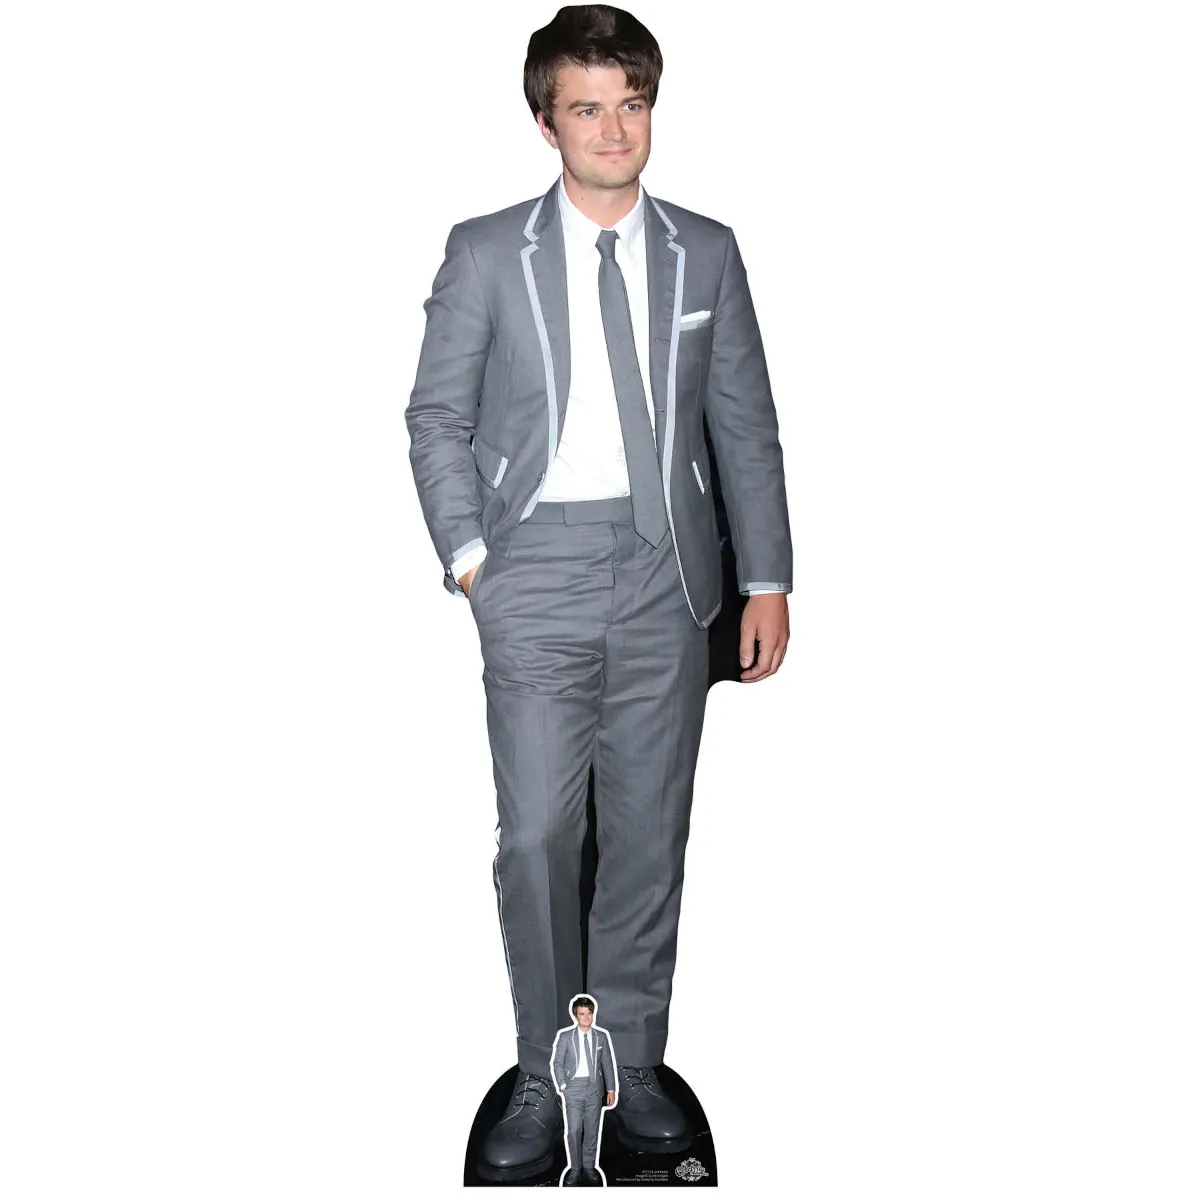 CS1014 Joe Keery 'Grey Suit' (American Actor) Lifesize + Mini Cardboard Cutout Standee Front